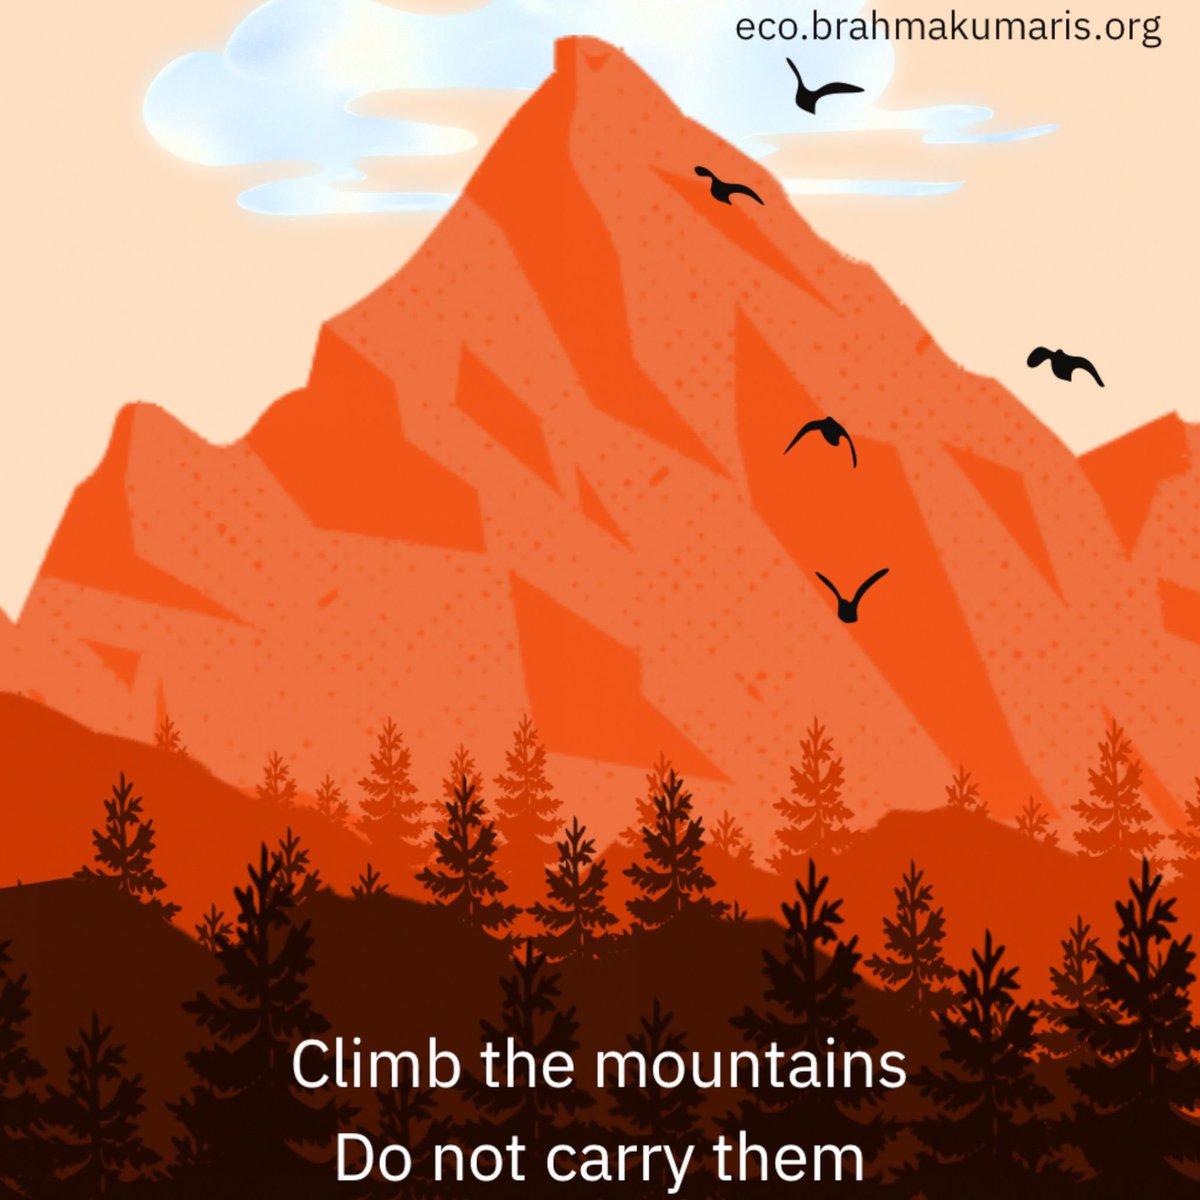 Climb the Mountains. Do not carry them. #ClimateAction #EarthDay #environment #ecobrahmakumaris